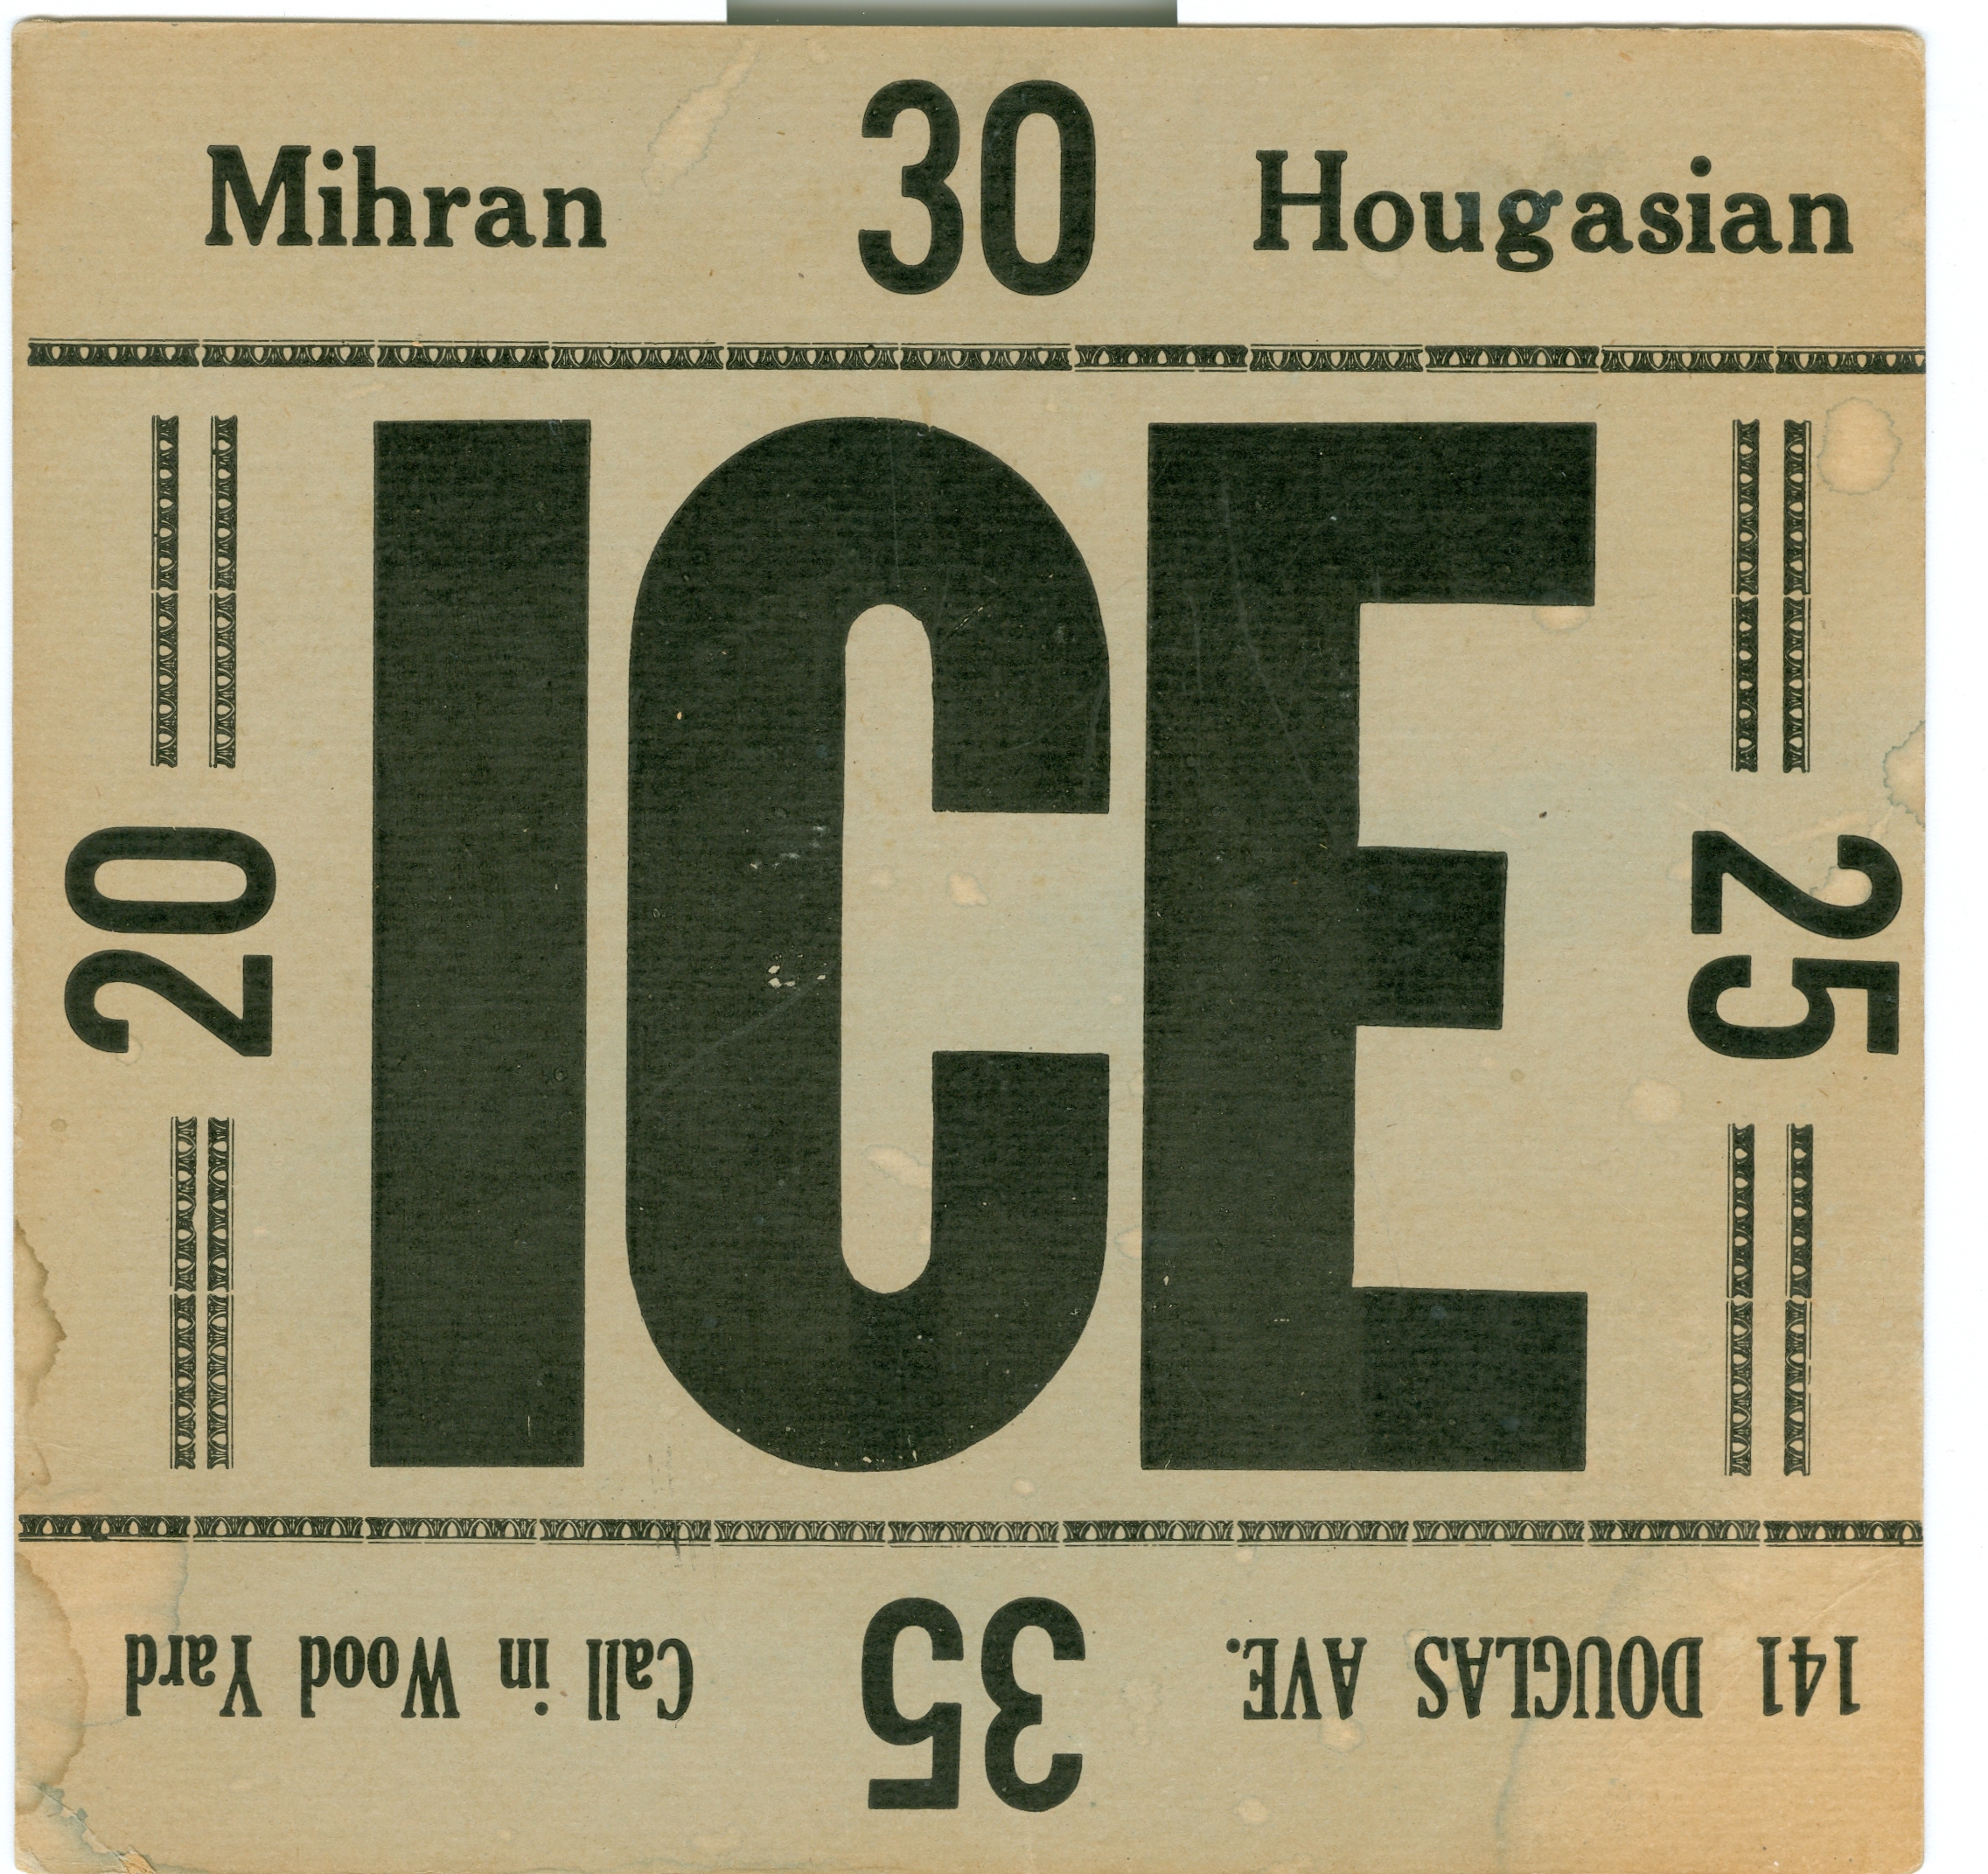 Hougasian Ice